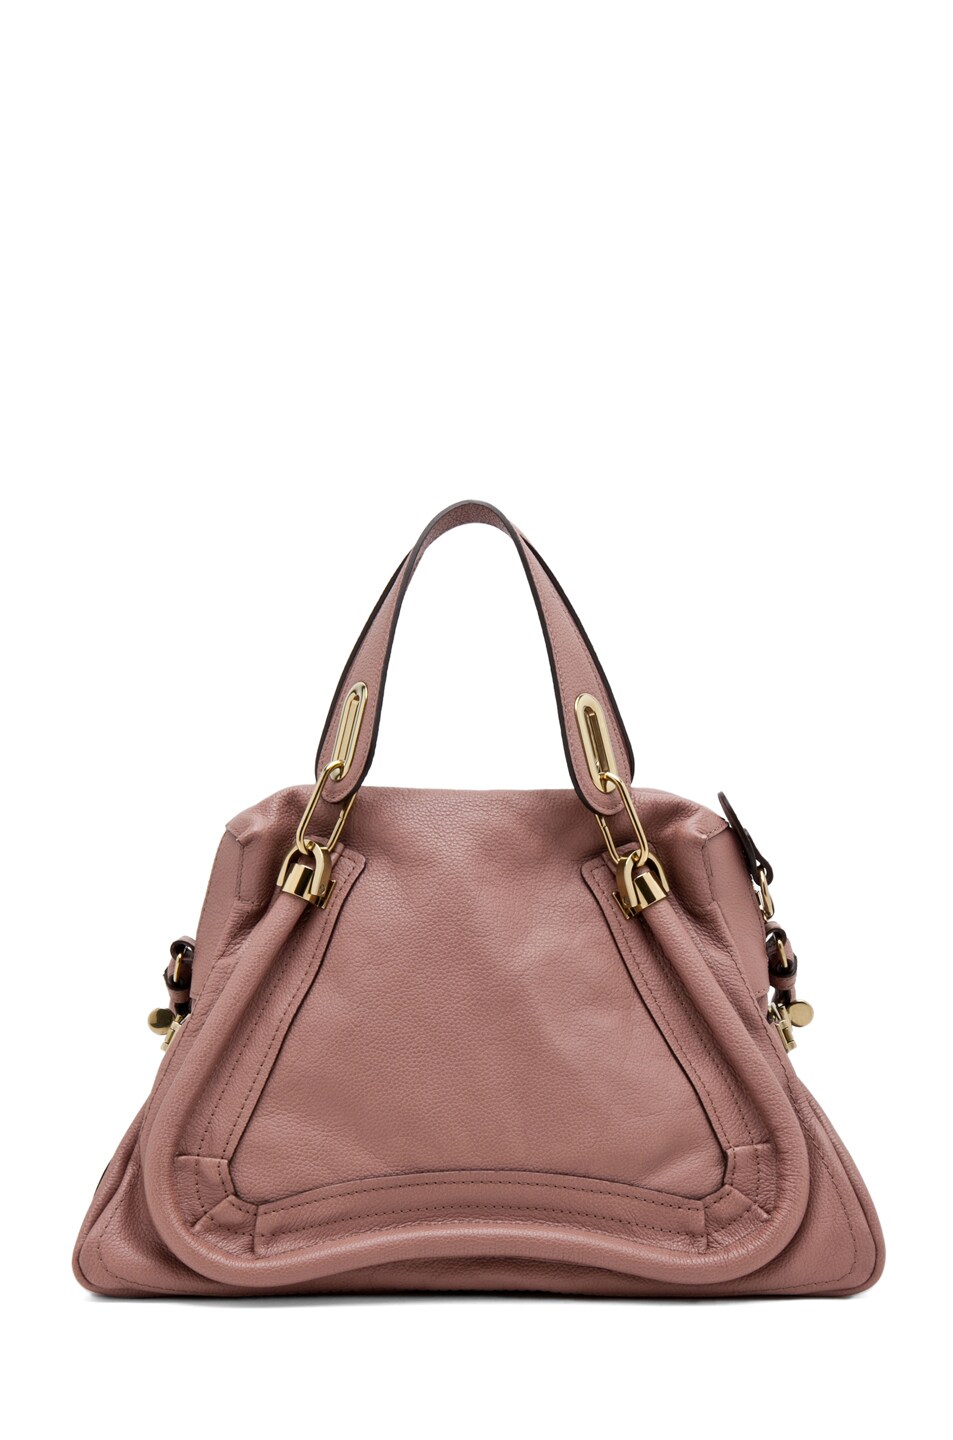 Chloe Paraty Medium Handbag with Strap in Desert Mauve | FWRD  